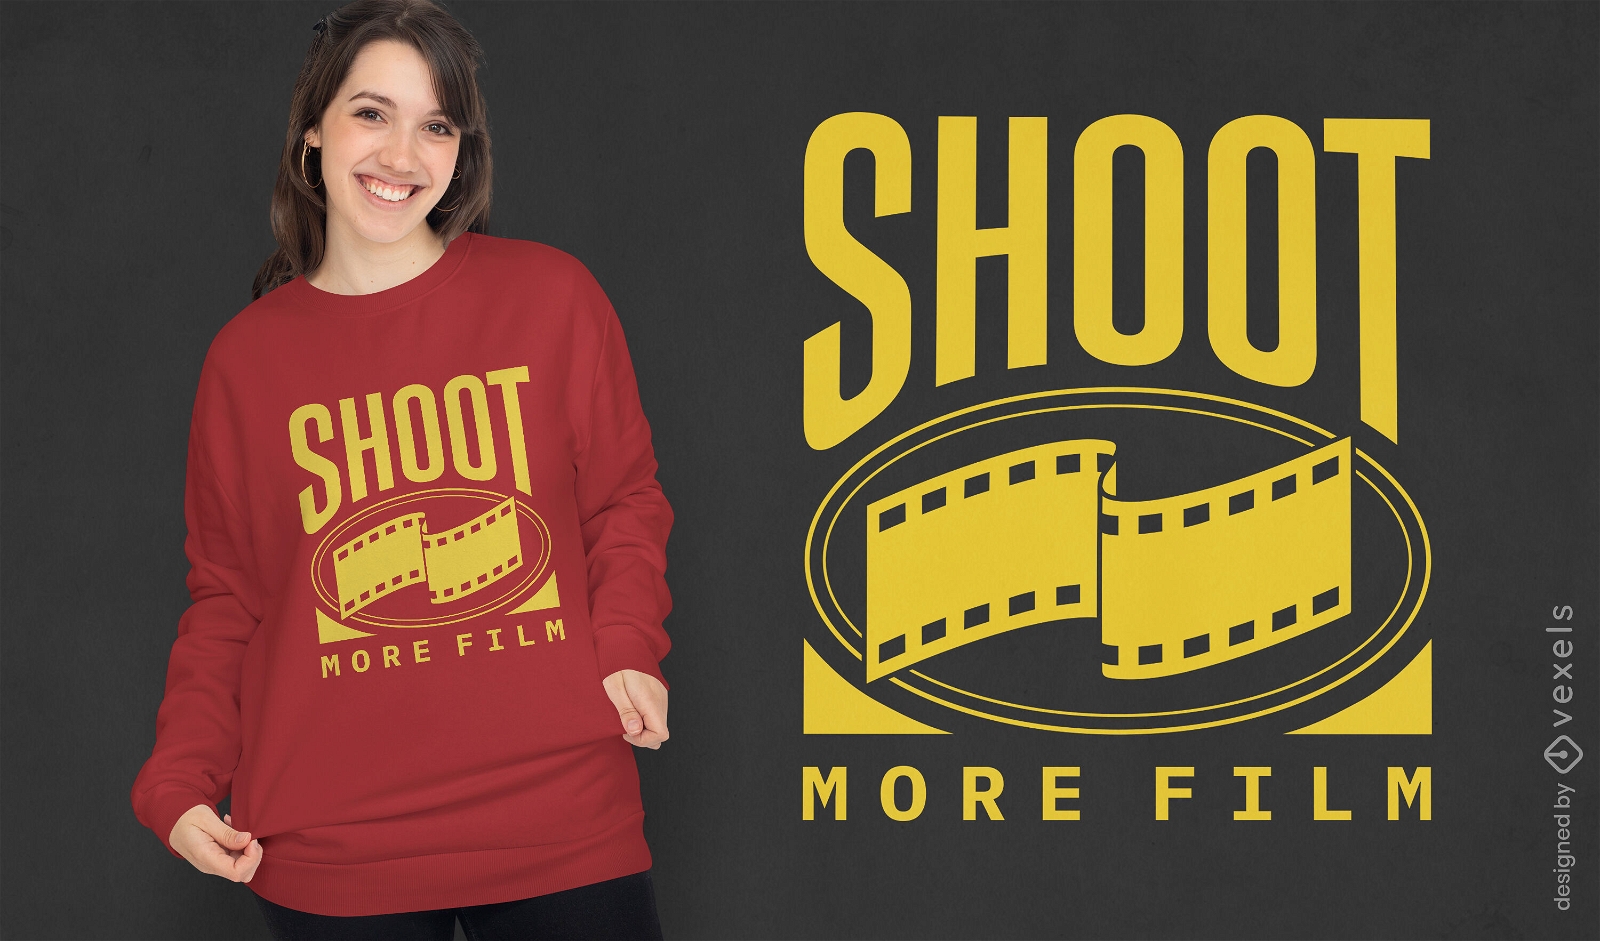 Shoot more film t-shirt design